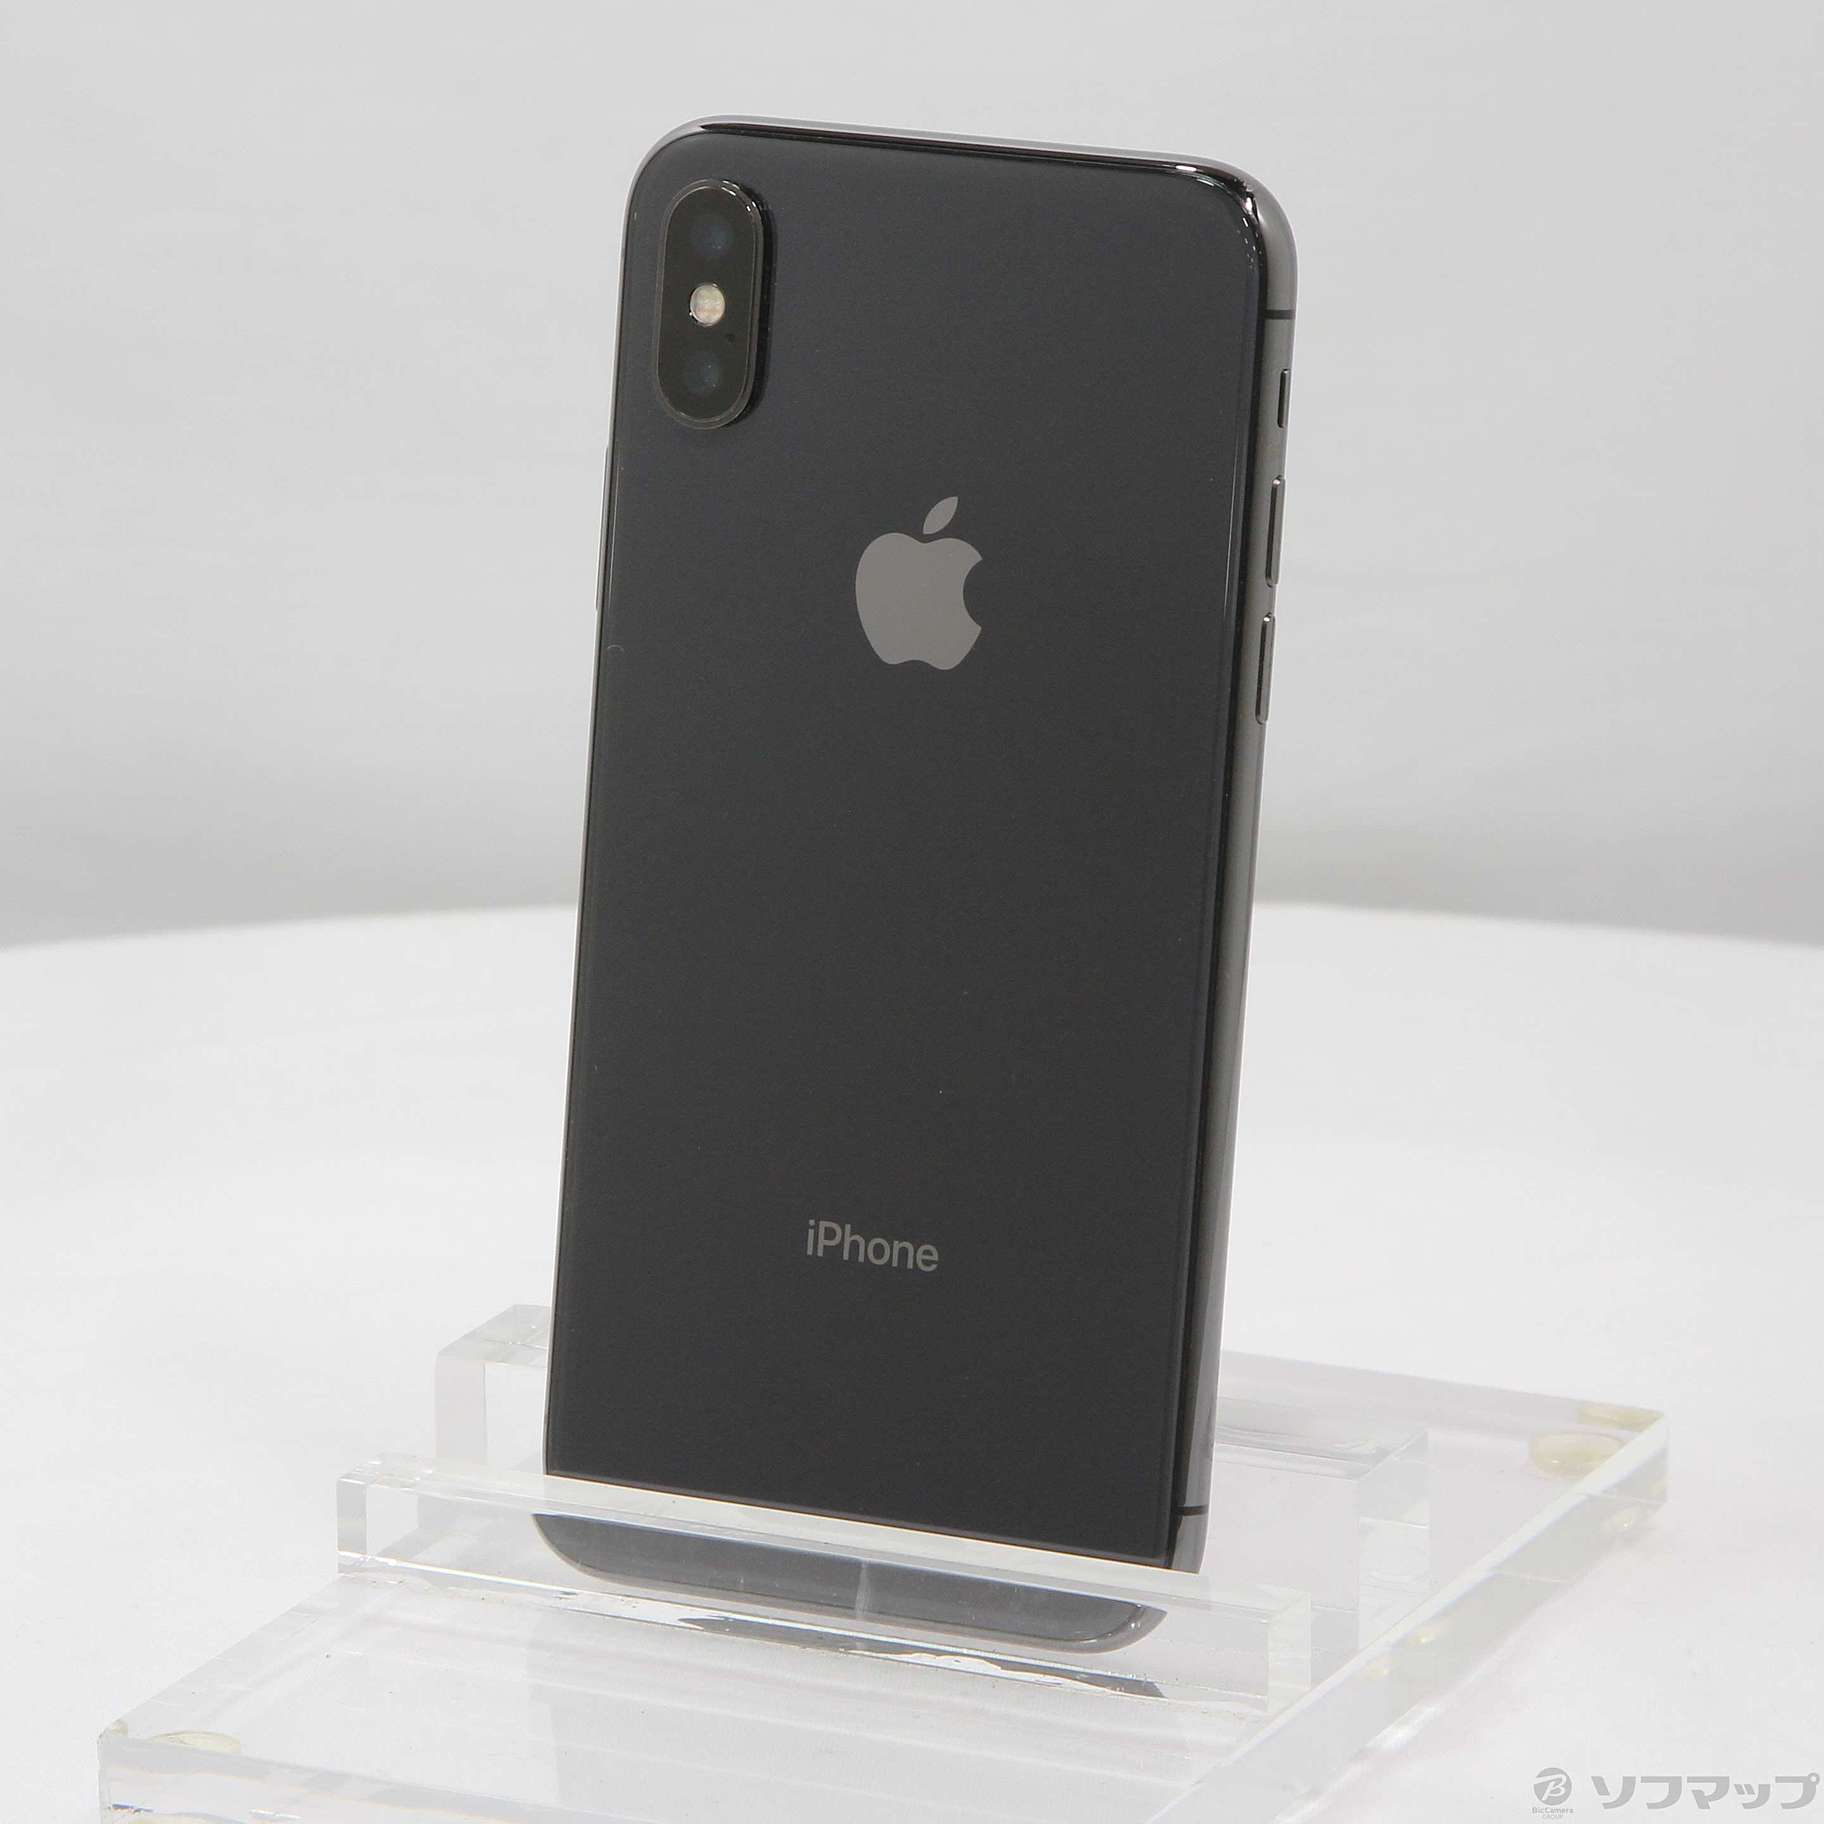 iPhoneX 256GB SIMフリー スペースグレー